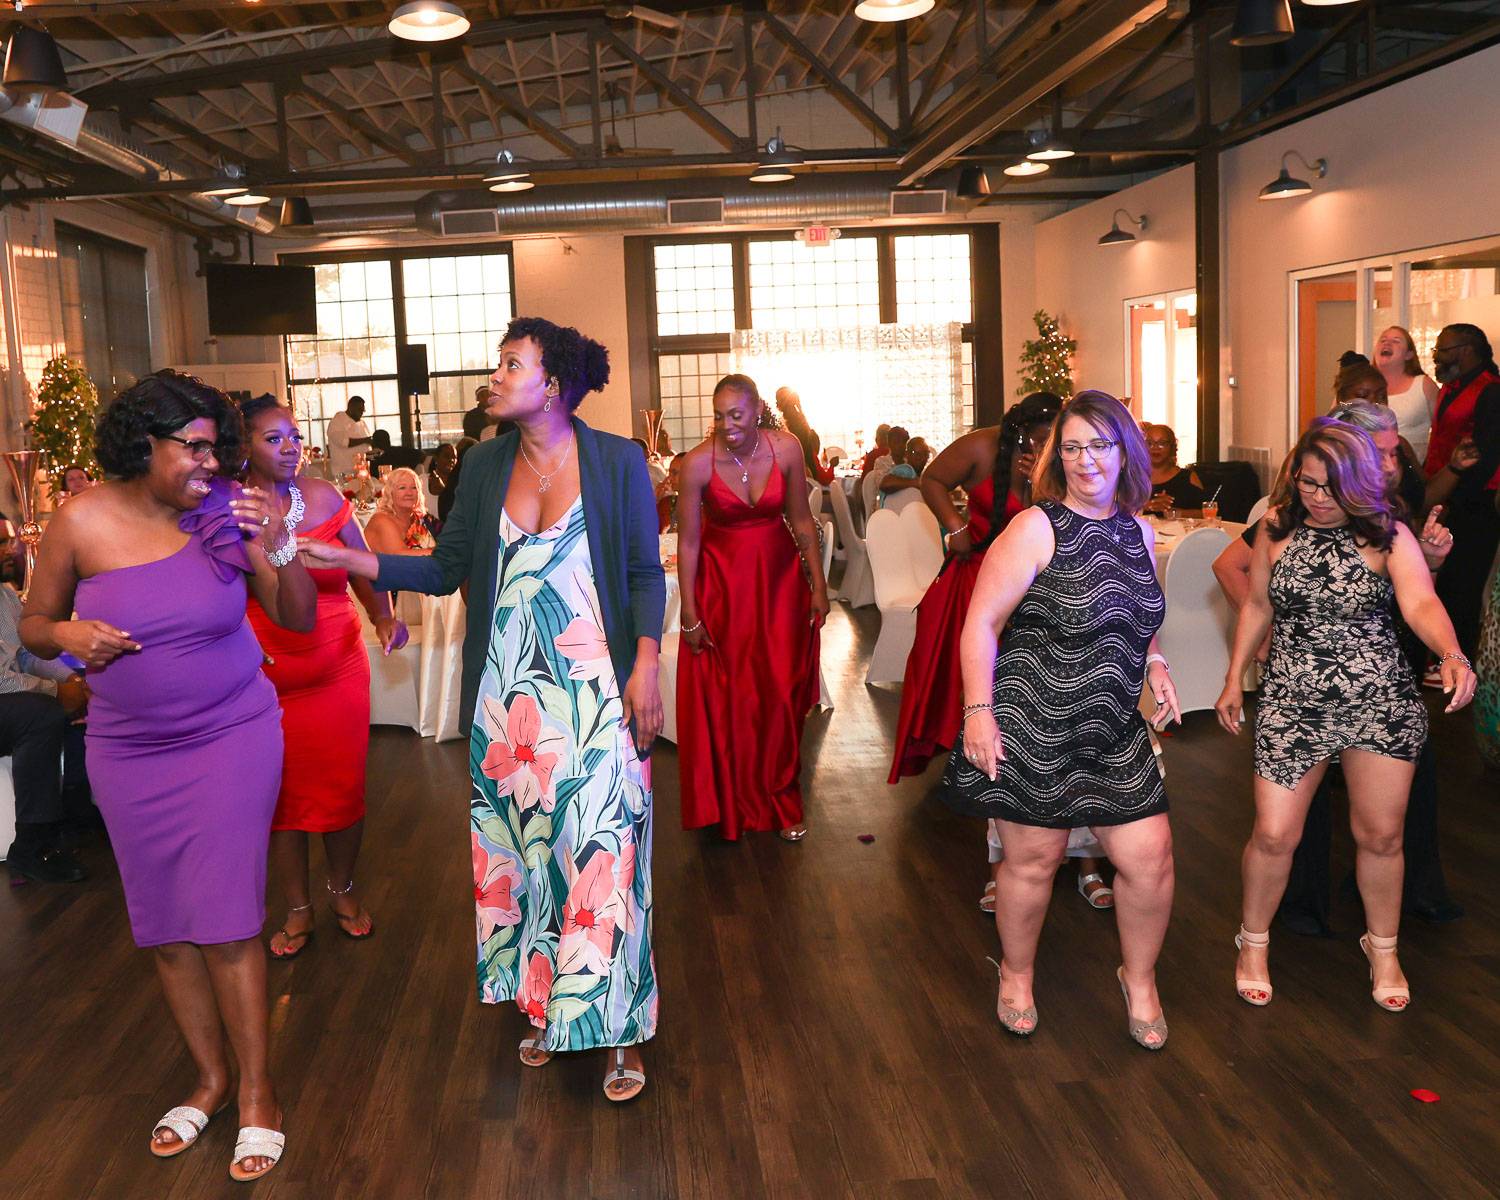 Women dancing in the wedding party